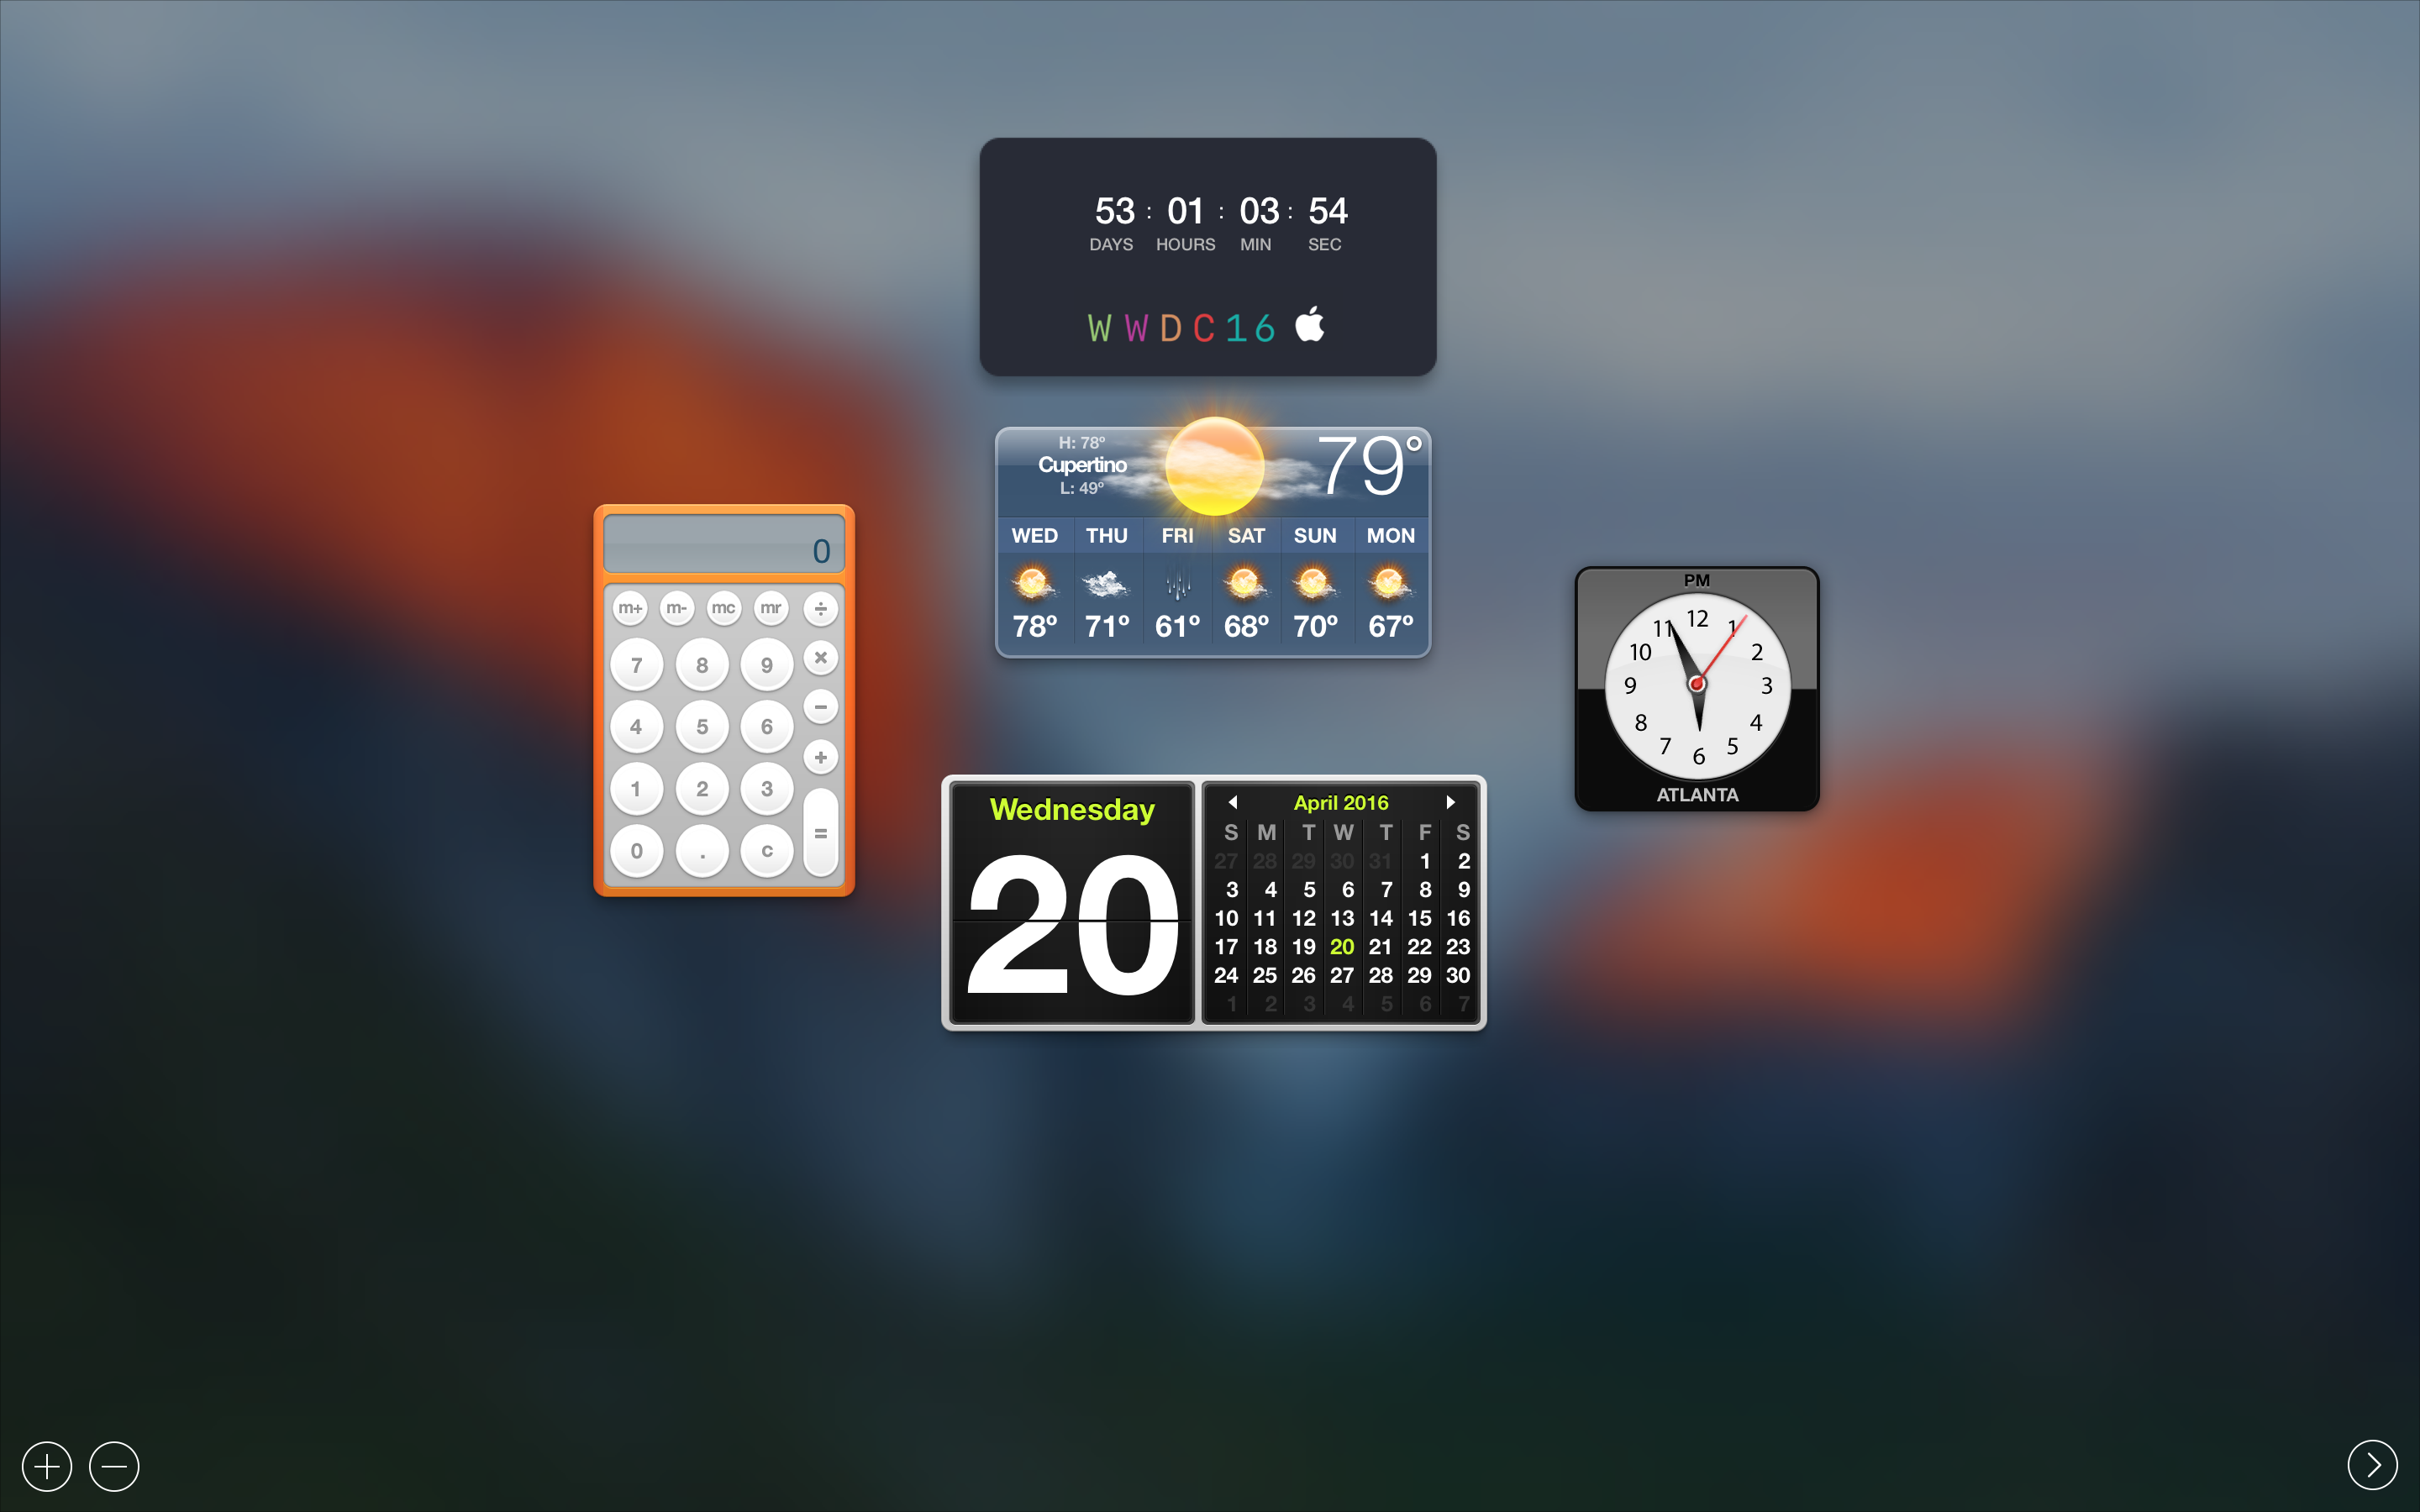 free calendar for macbook desktop